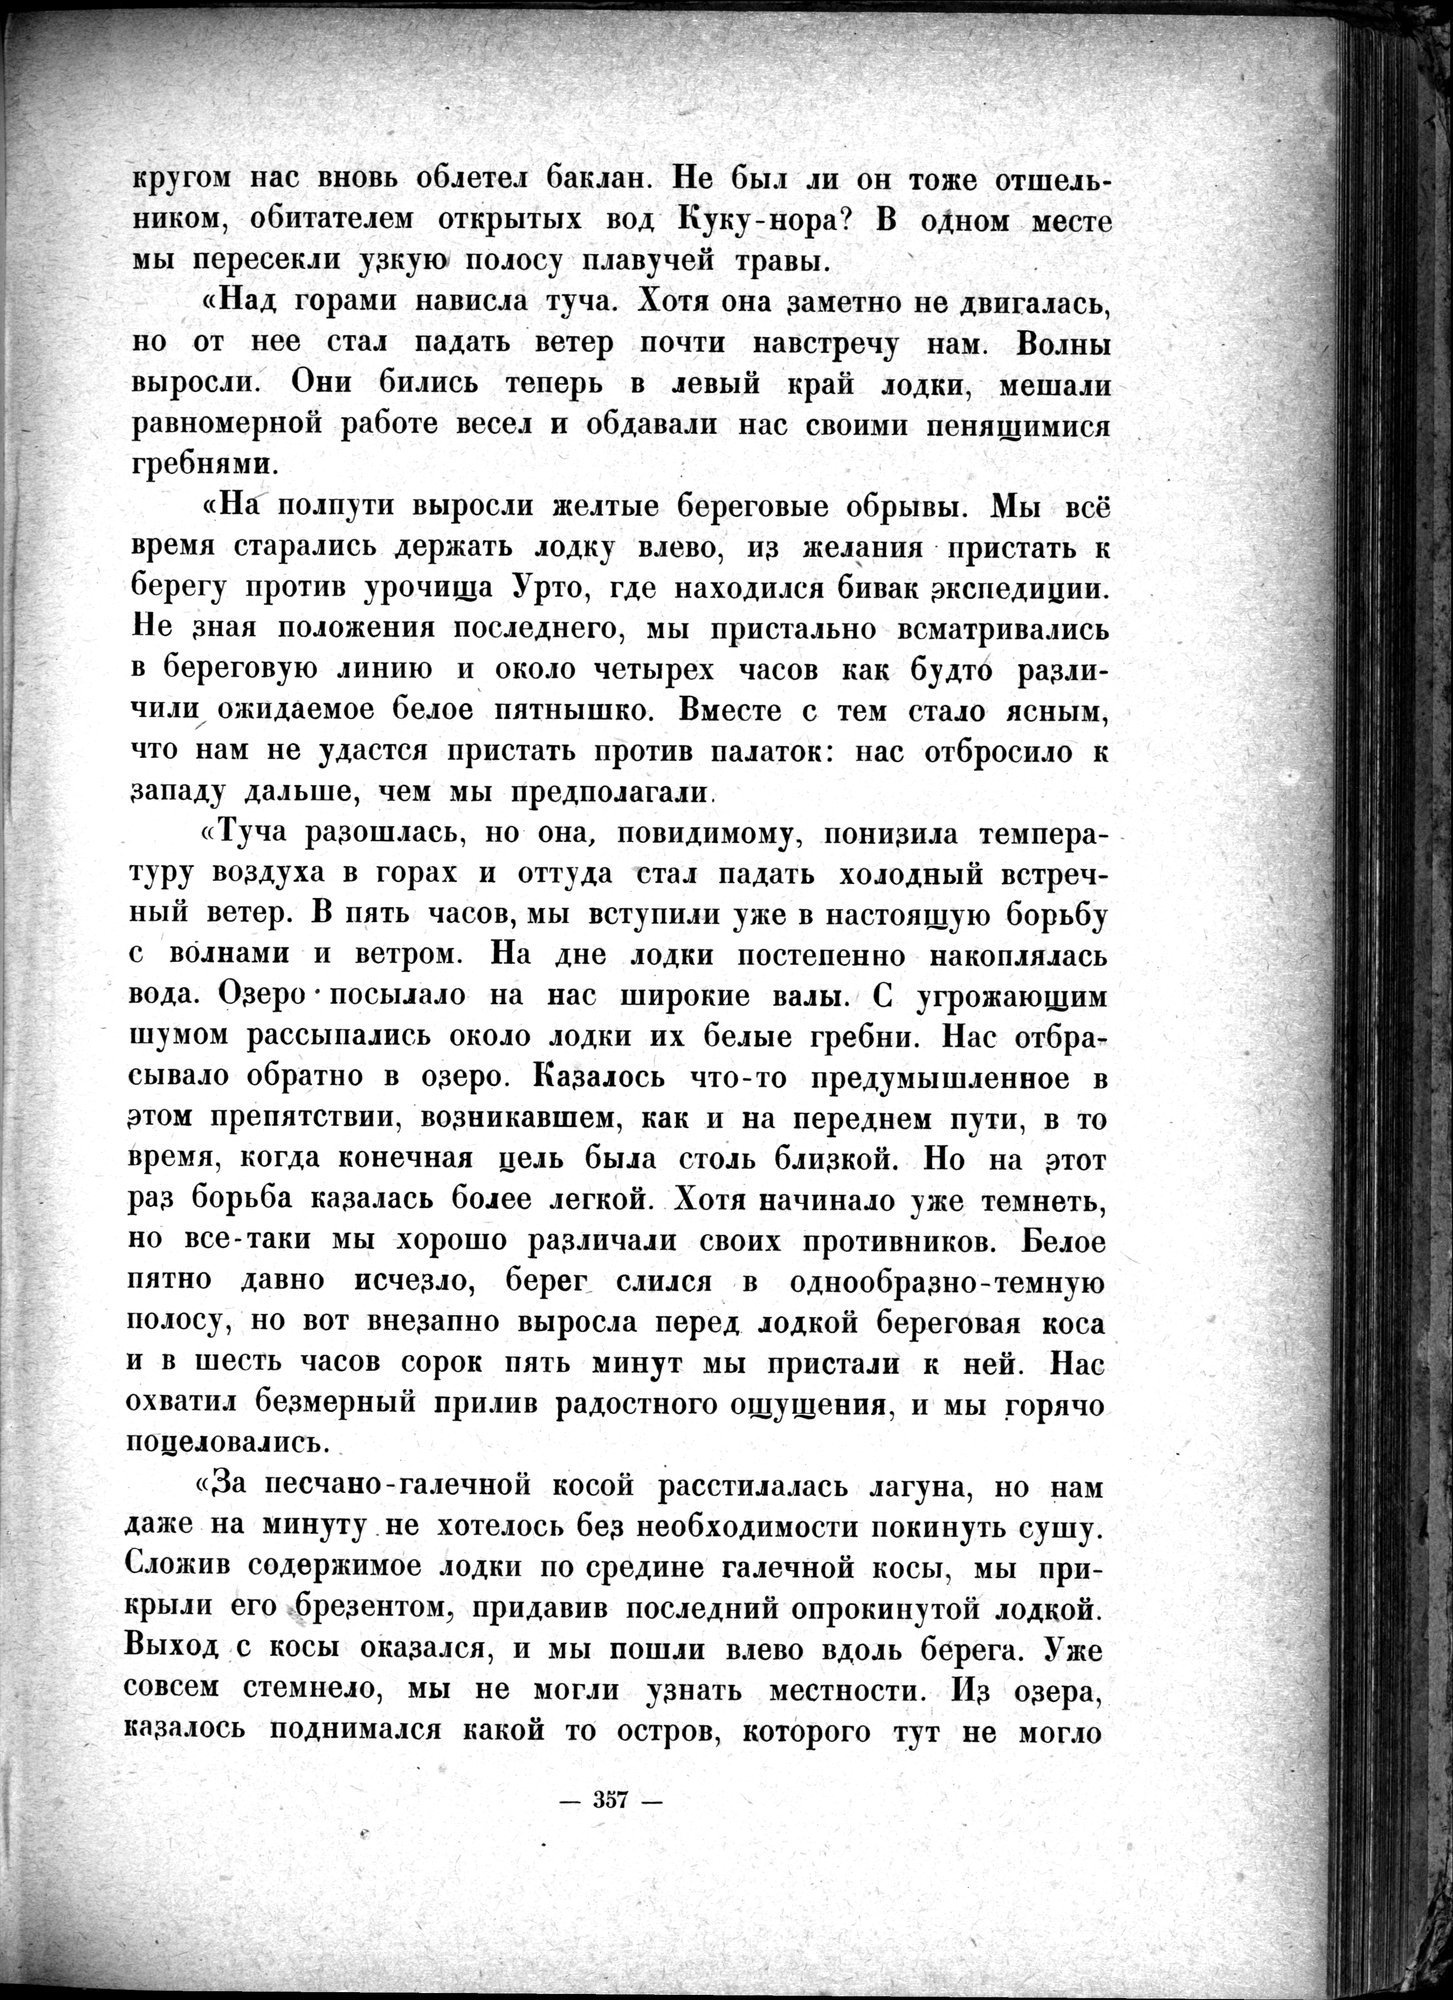 Mongoliya i Amdo i mertby gorod Khara-Khoto : vol.1 / Page 407 (Grayscale High Resolution Image)